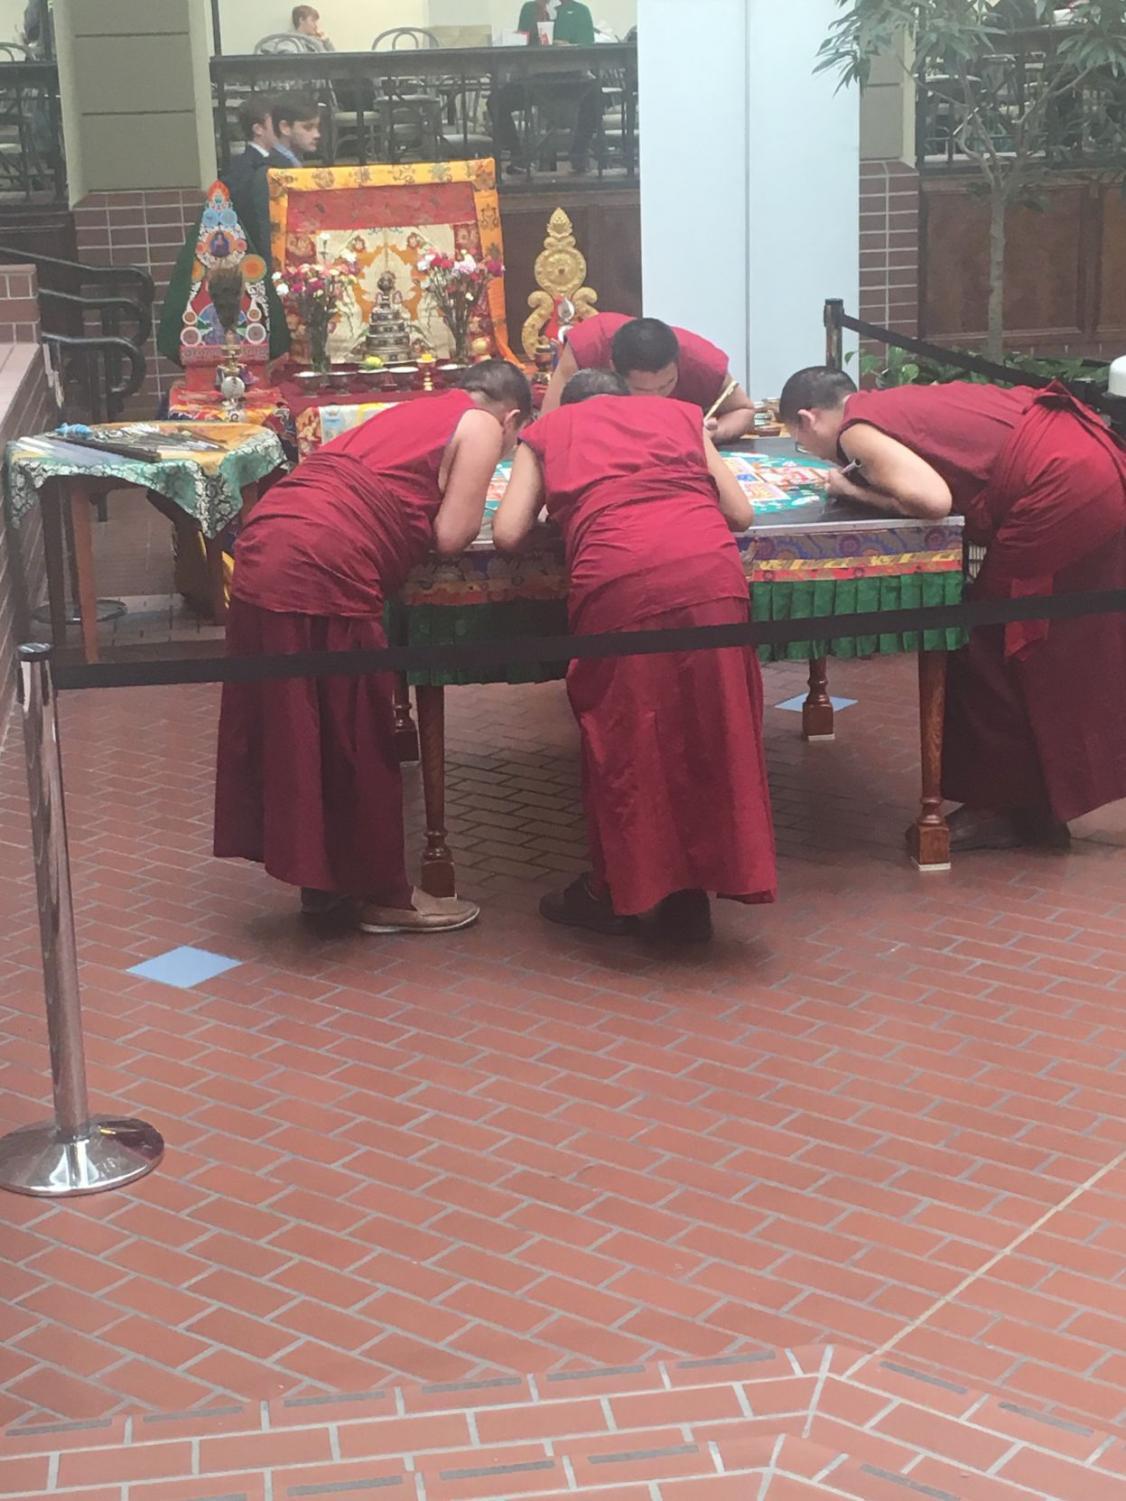 Bringing+culture+to+campus%3A+The+Mystical+Arts+of+Tibet